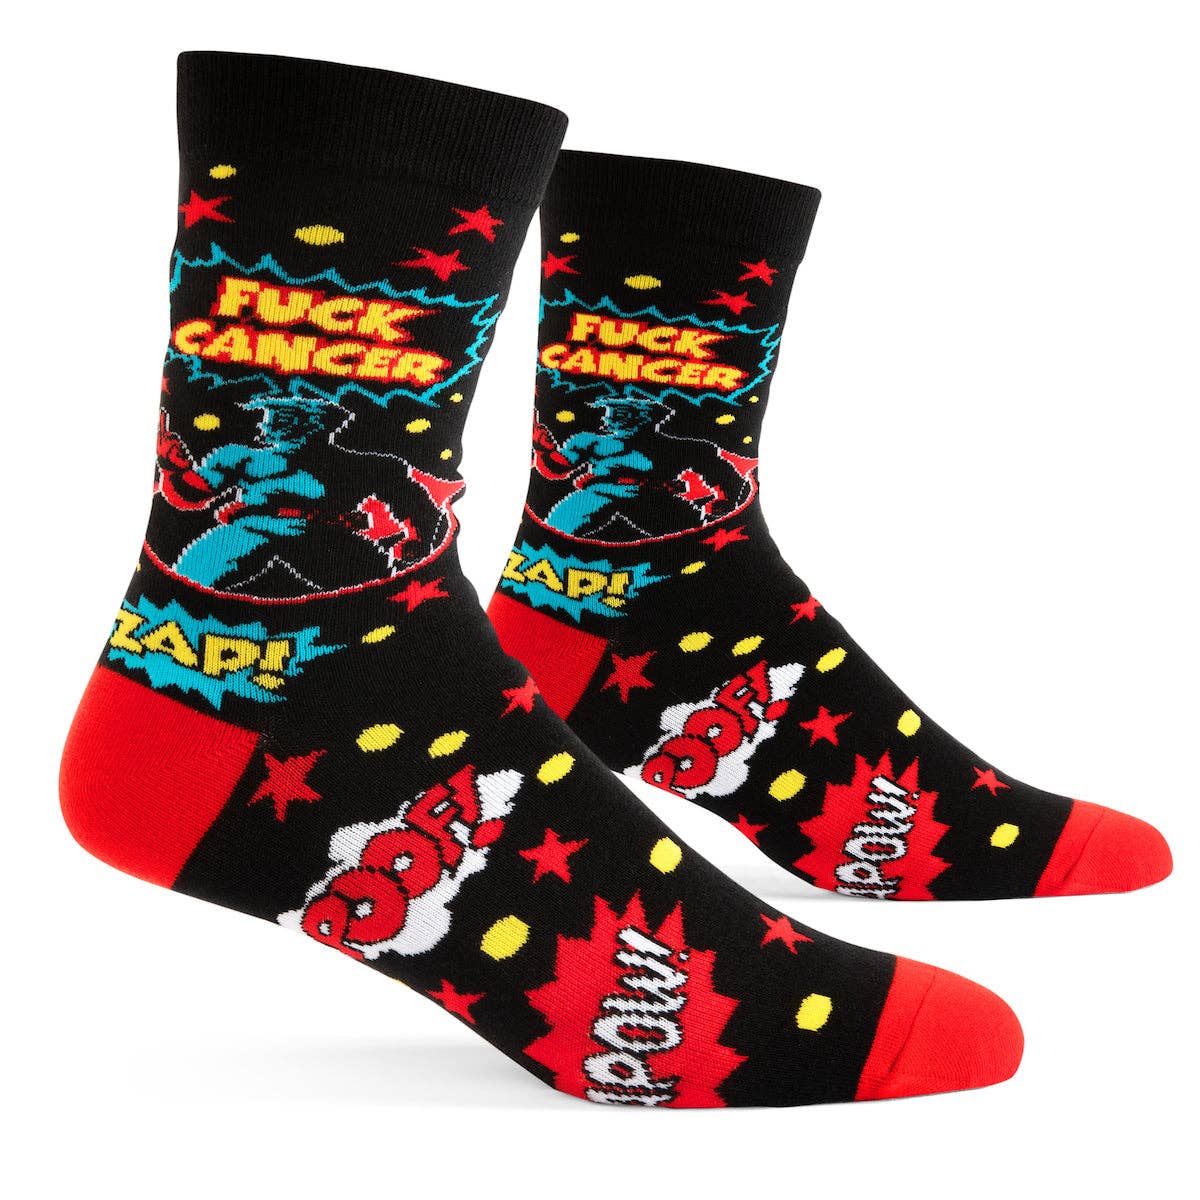 Lavley - Superhero "F*ck Cancer" Socks